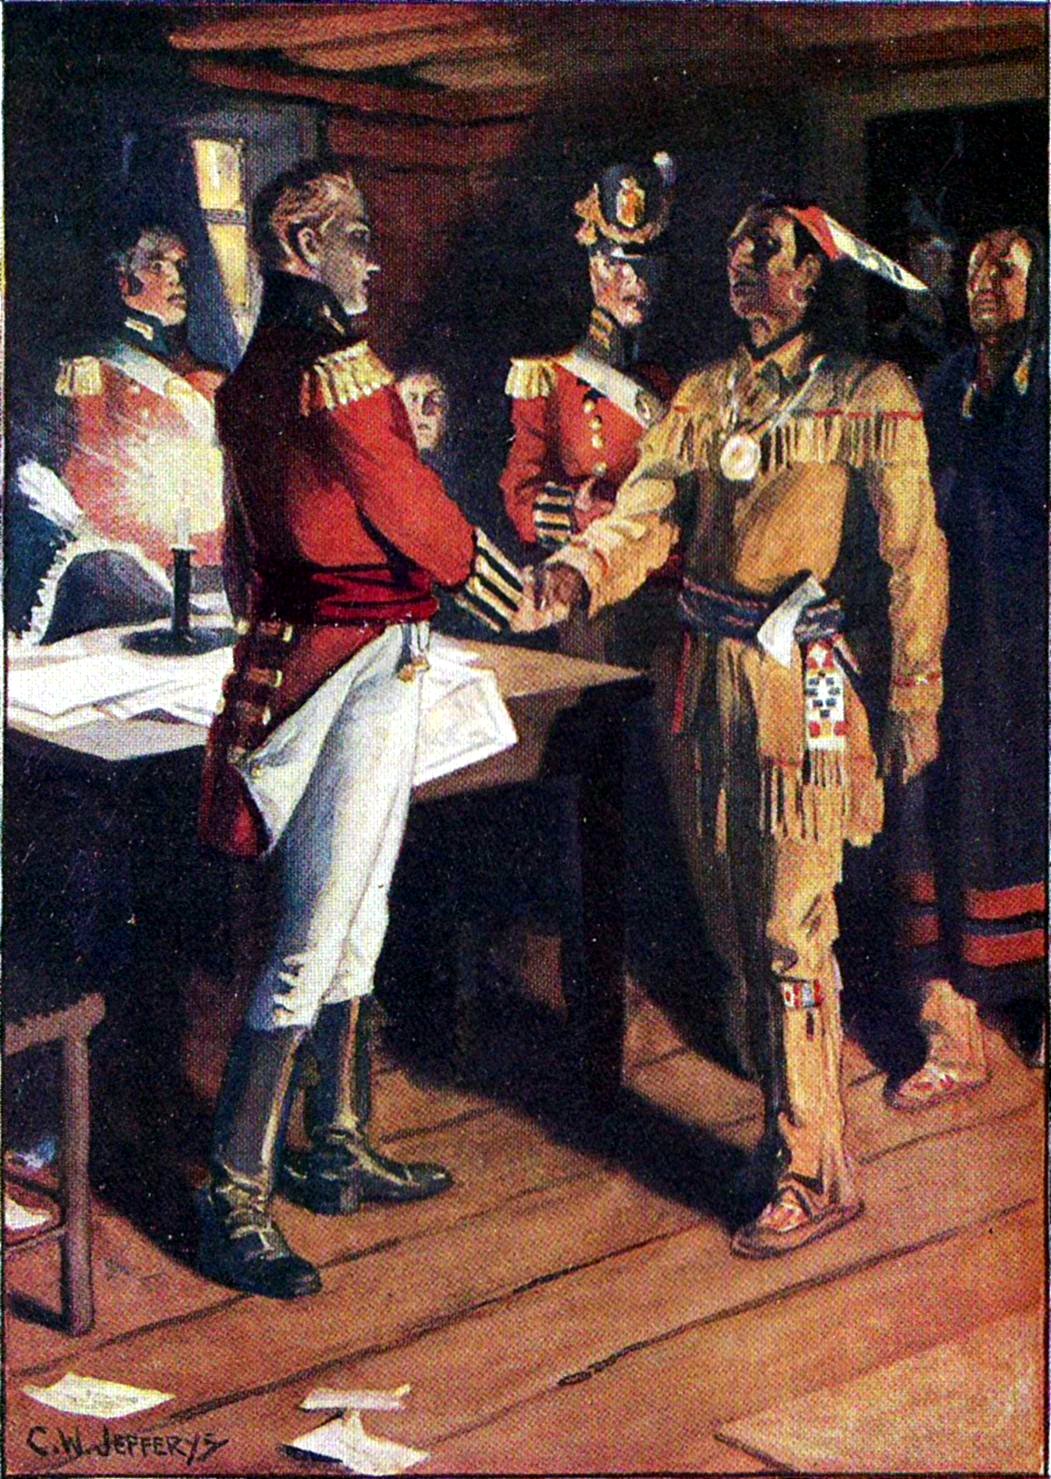 [The Meeting of Brock and Tecumseh]